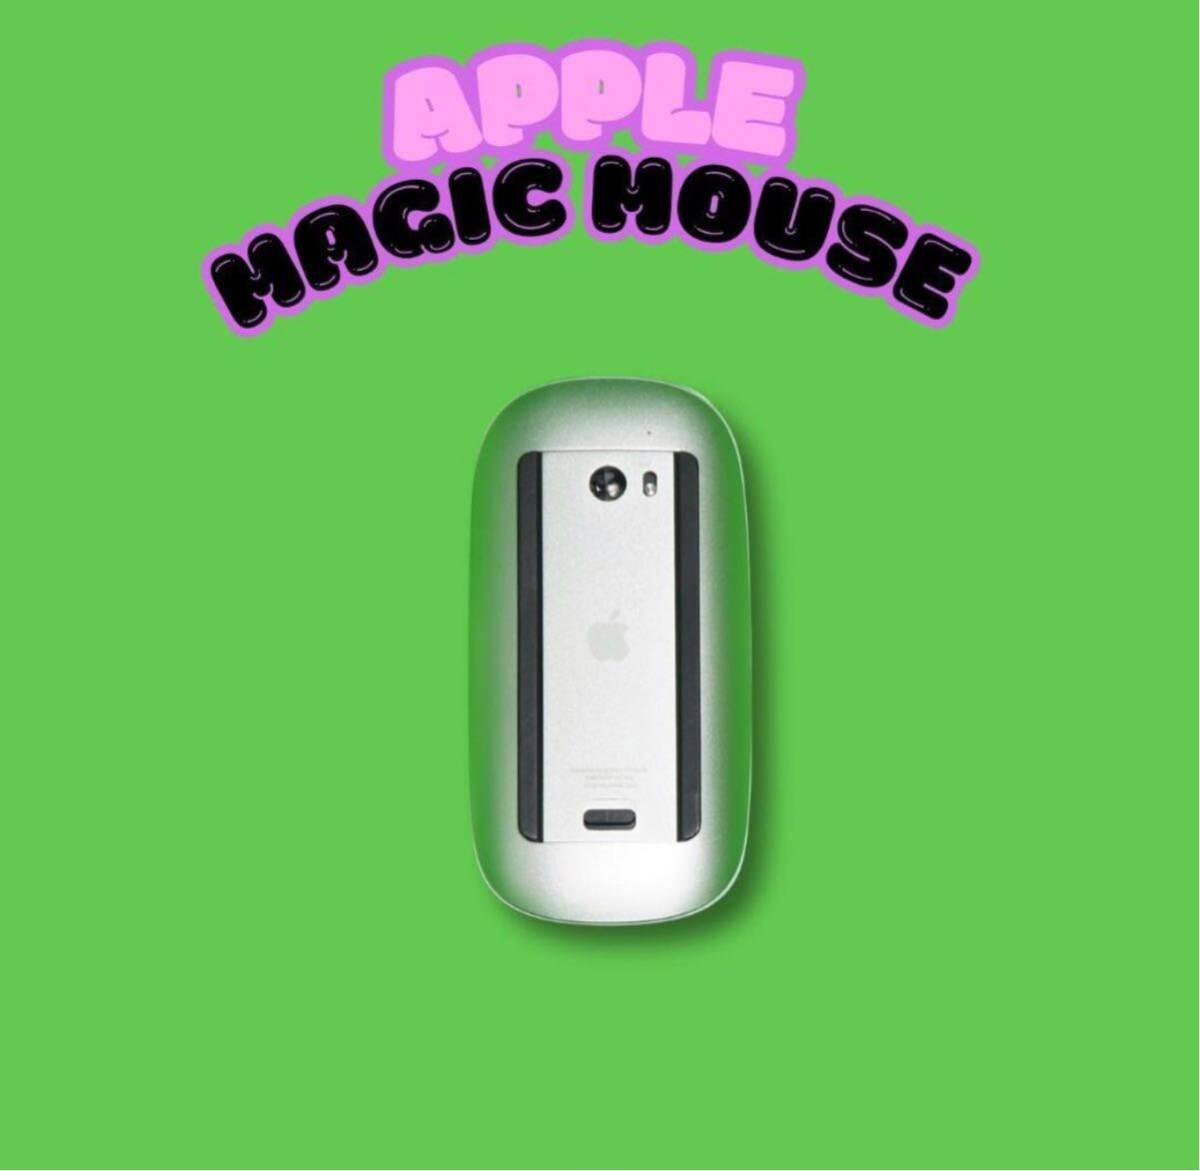 1 jpy ~ Apple Magic mouse MB829J/A operation test OK